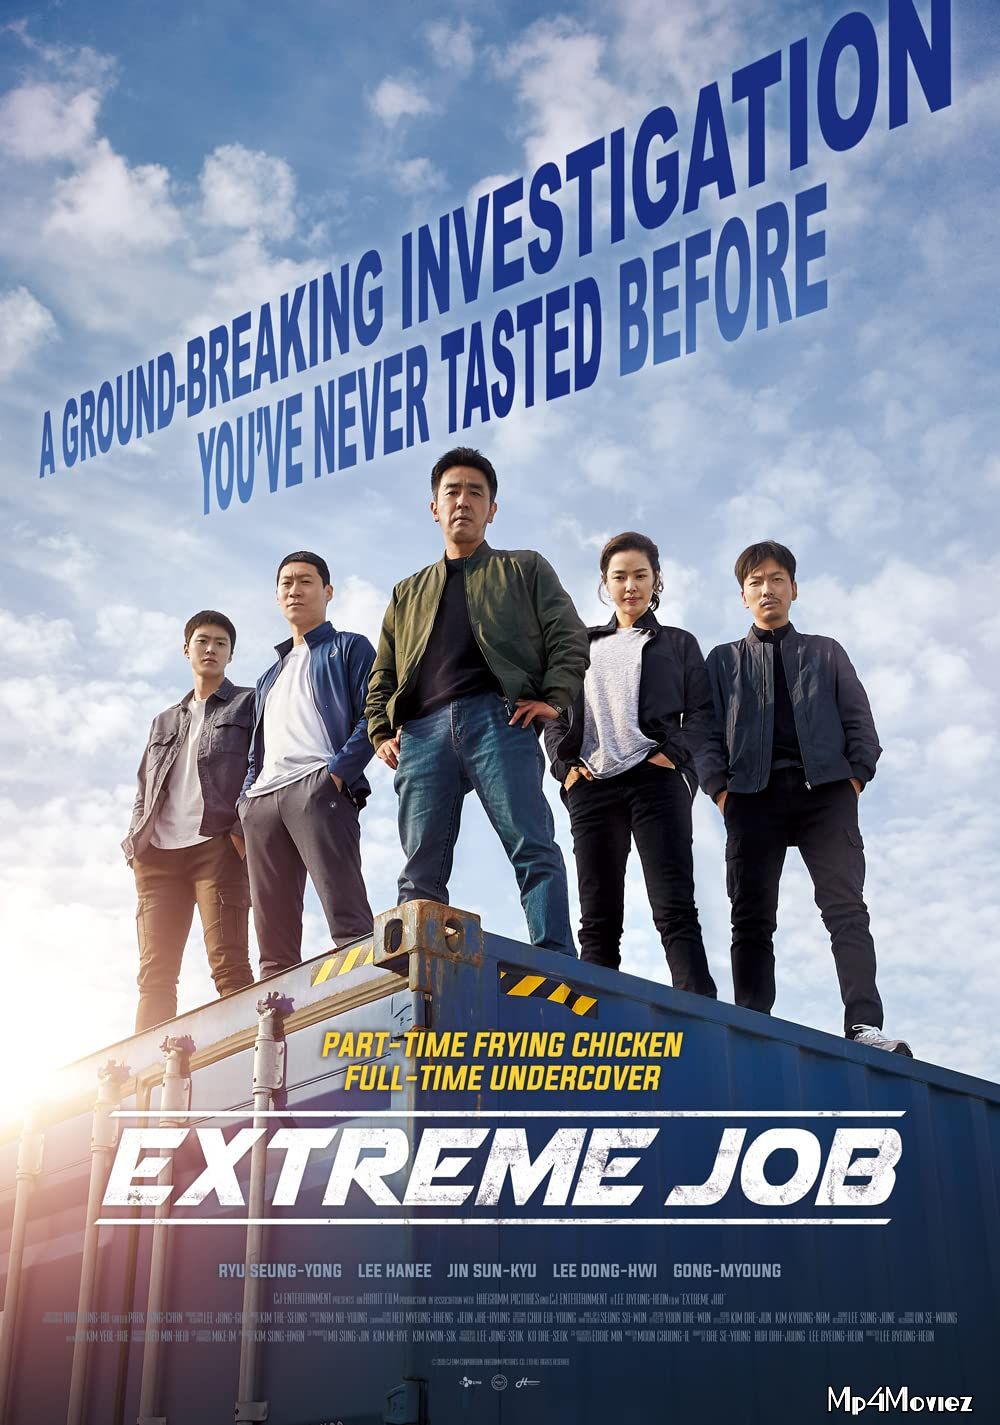 Extreme Job (2019) Hindi Dubbed Full Movie download full movie